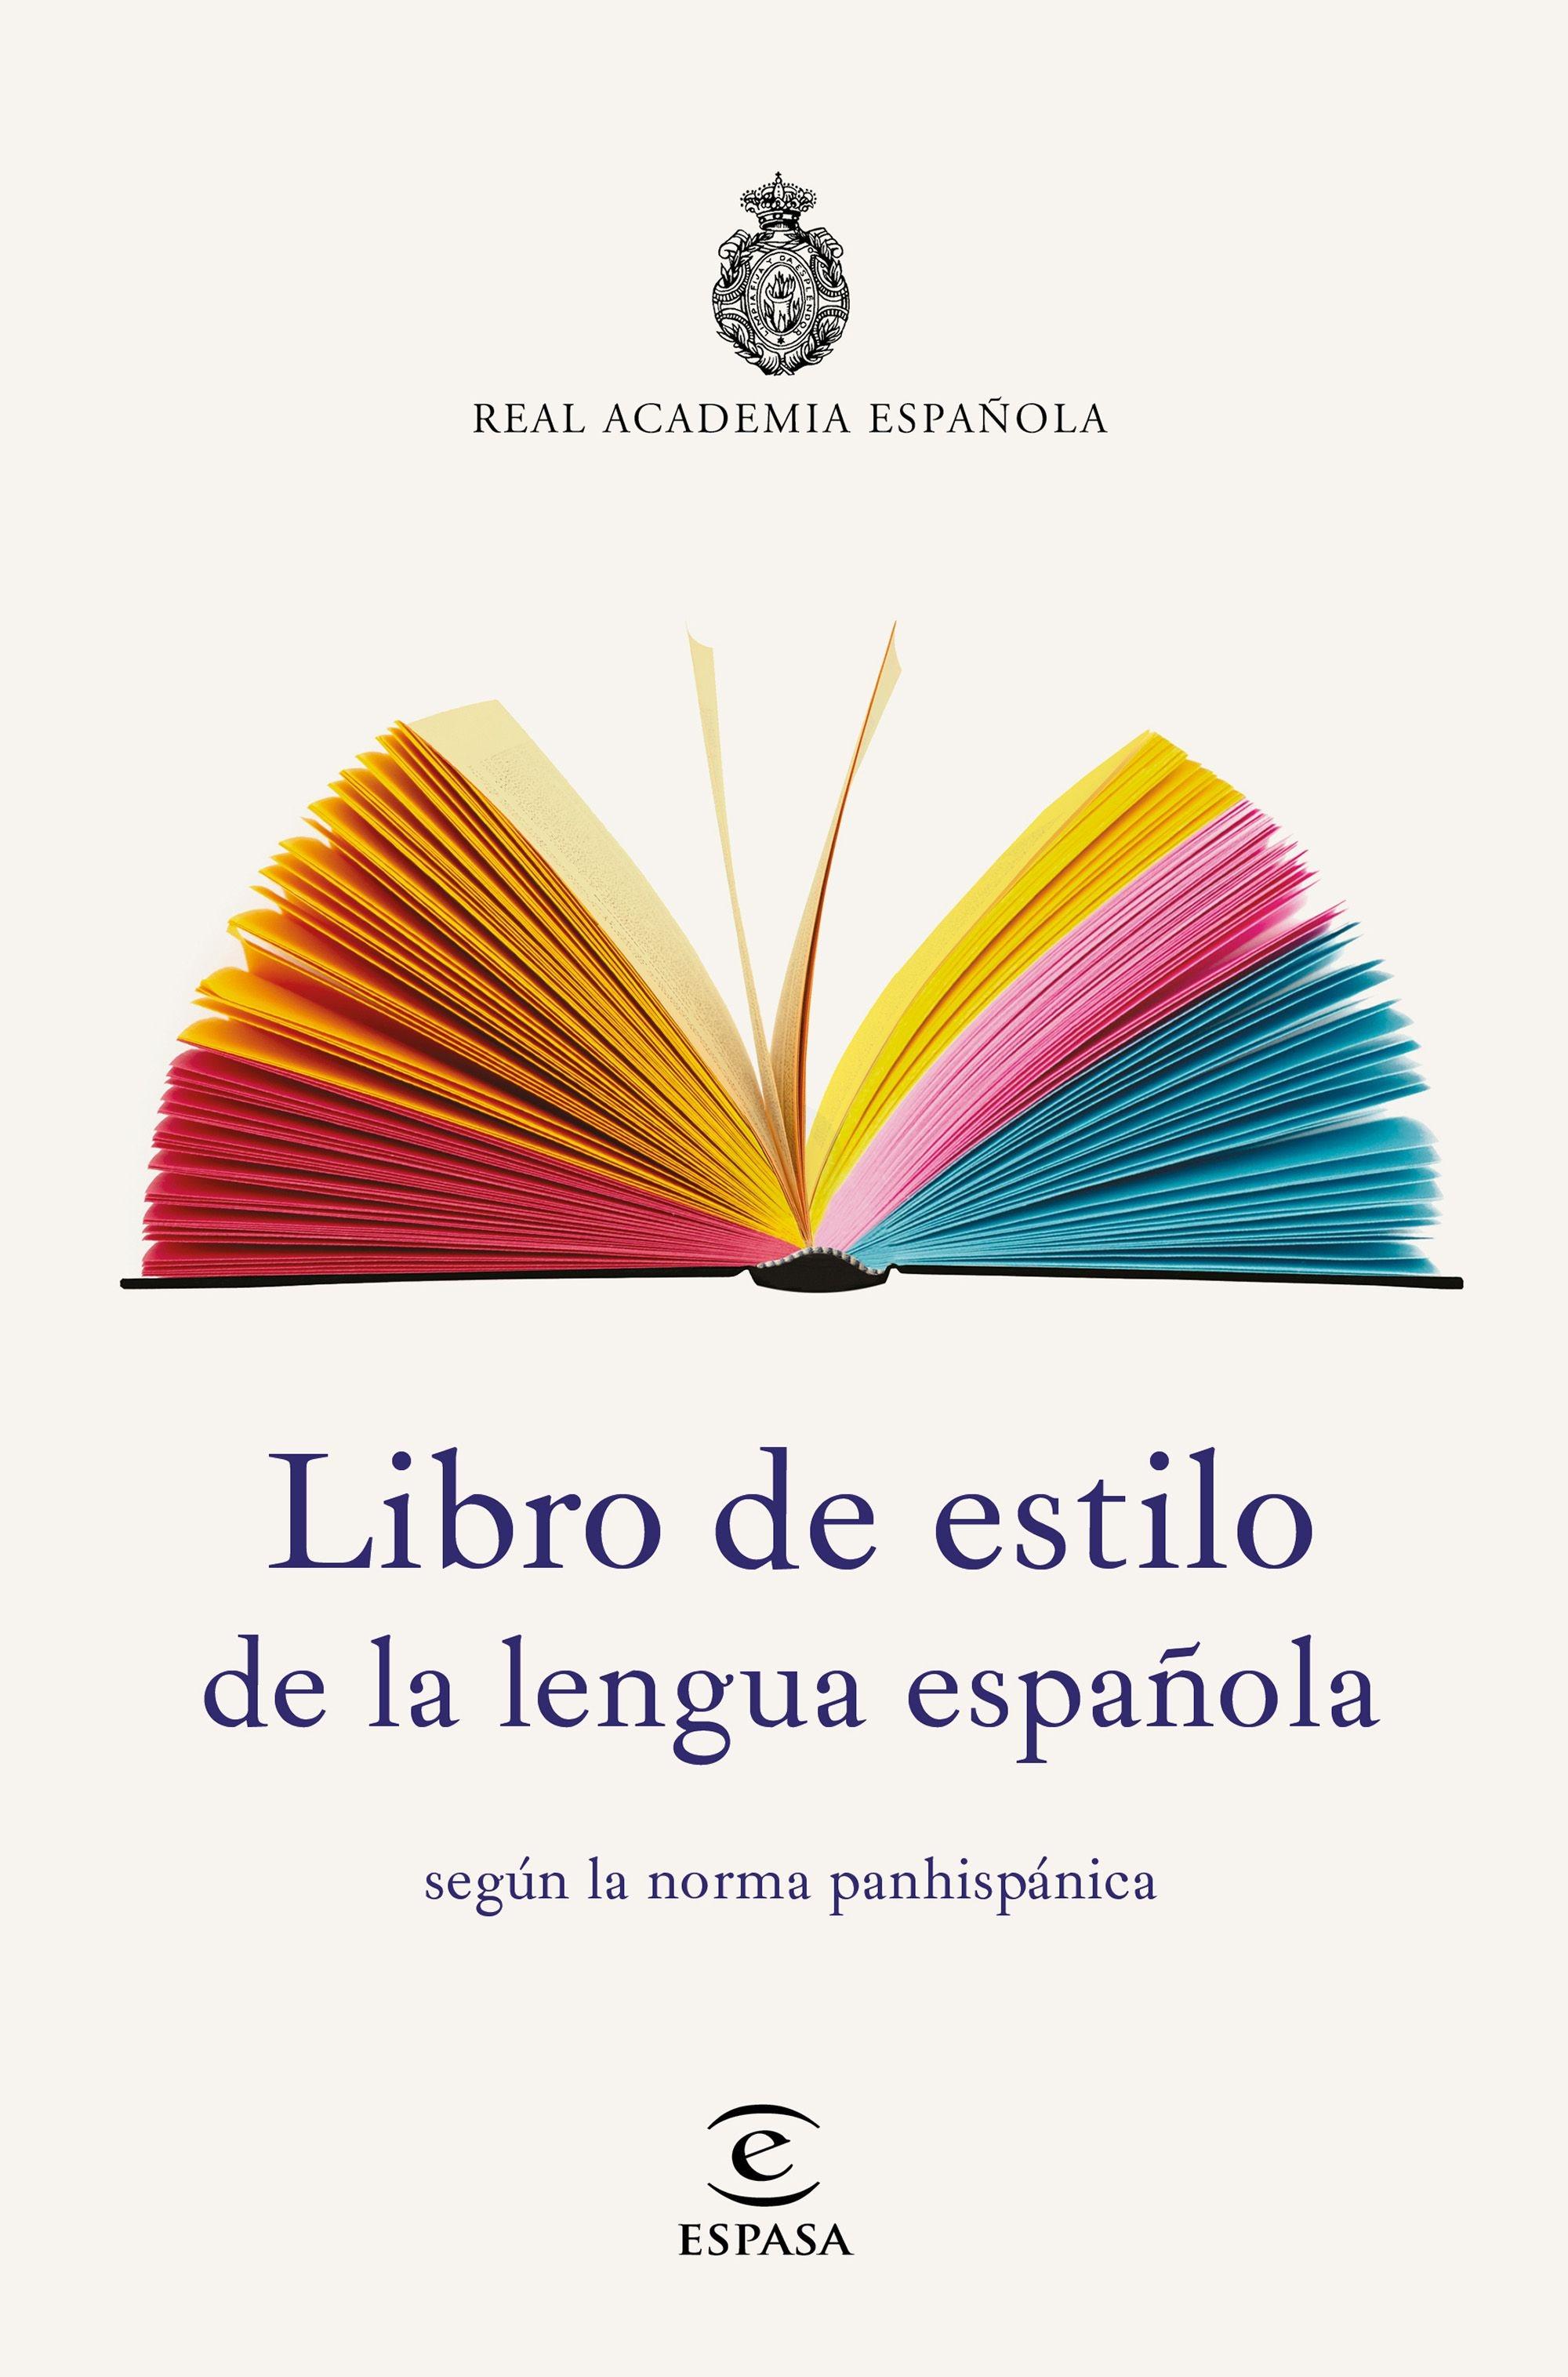 Libro de Estilo de la Lengua Española "Según la Norma Panhispánica"